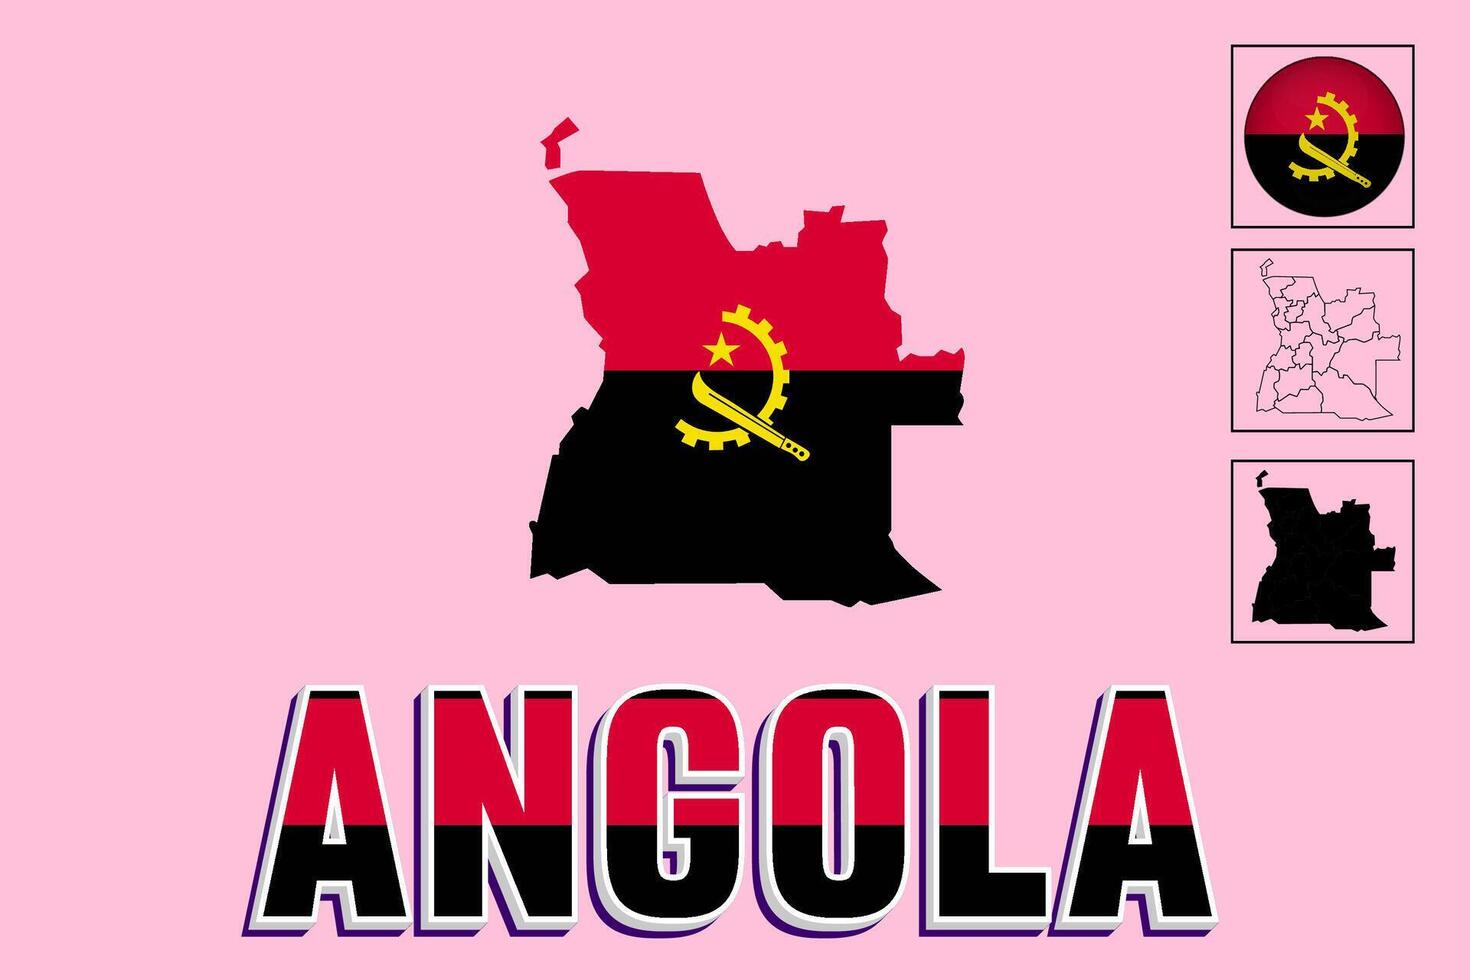 angola mapa y angola bandera vector dibujo